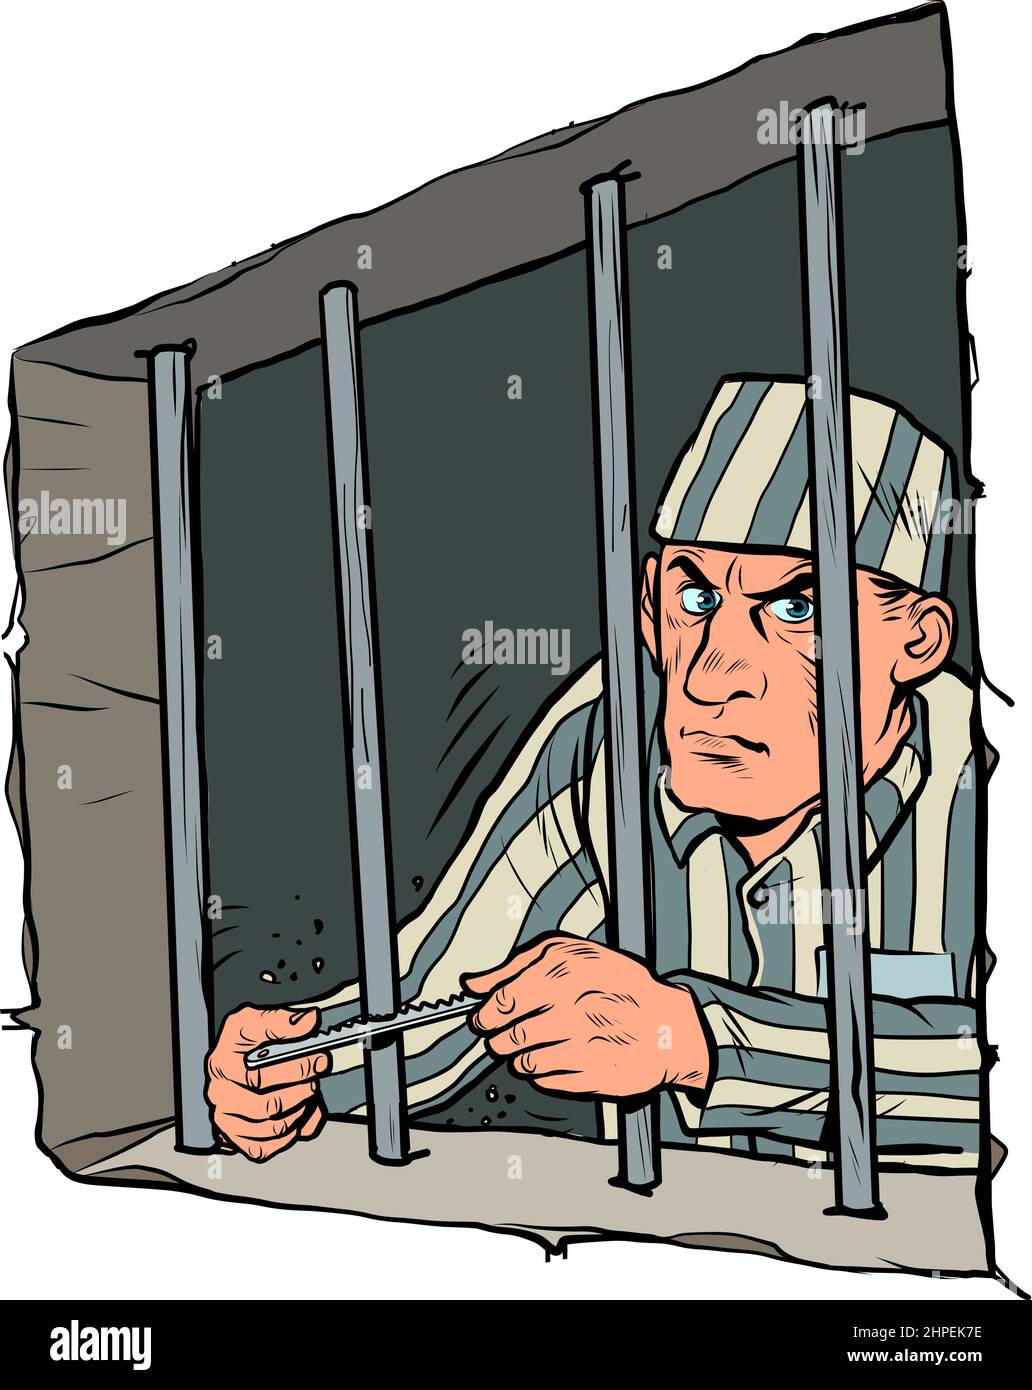 The lawbreaker is in jail. a prisoner in a striped uniform, a dangerous criminal. Escape attempt Stock Vector